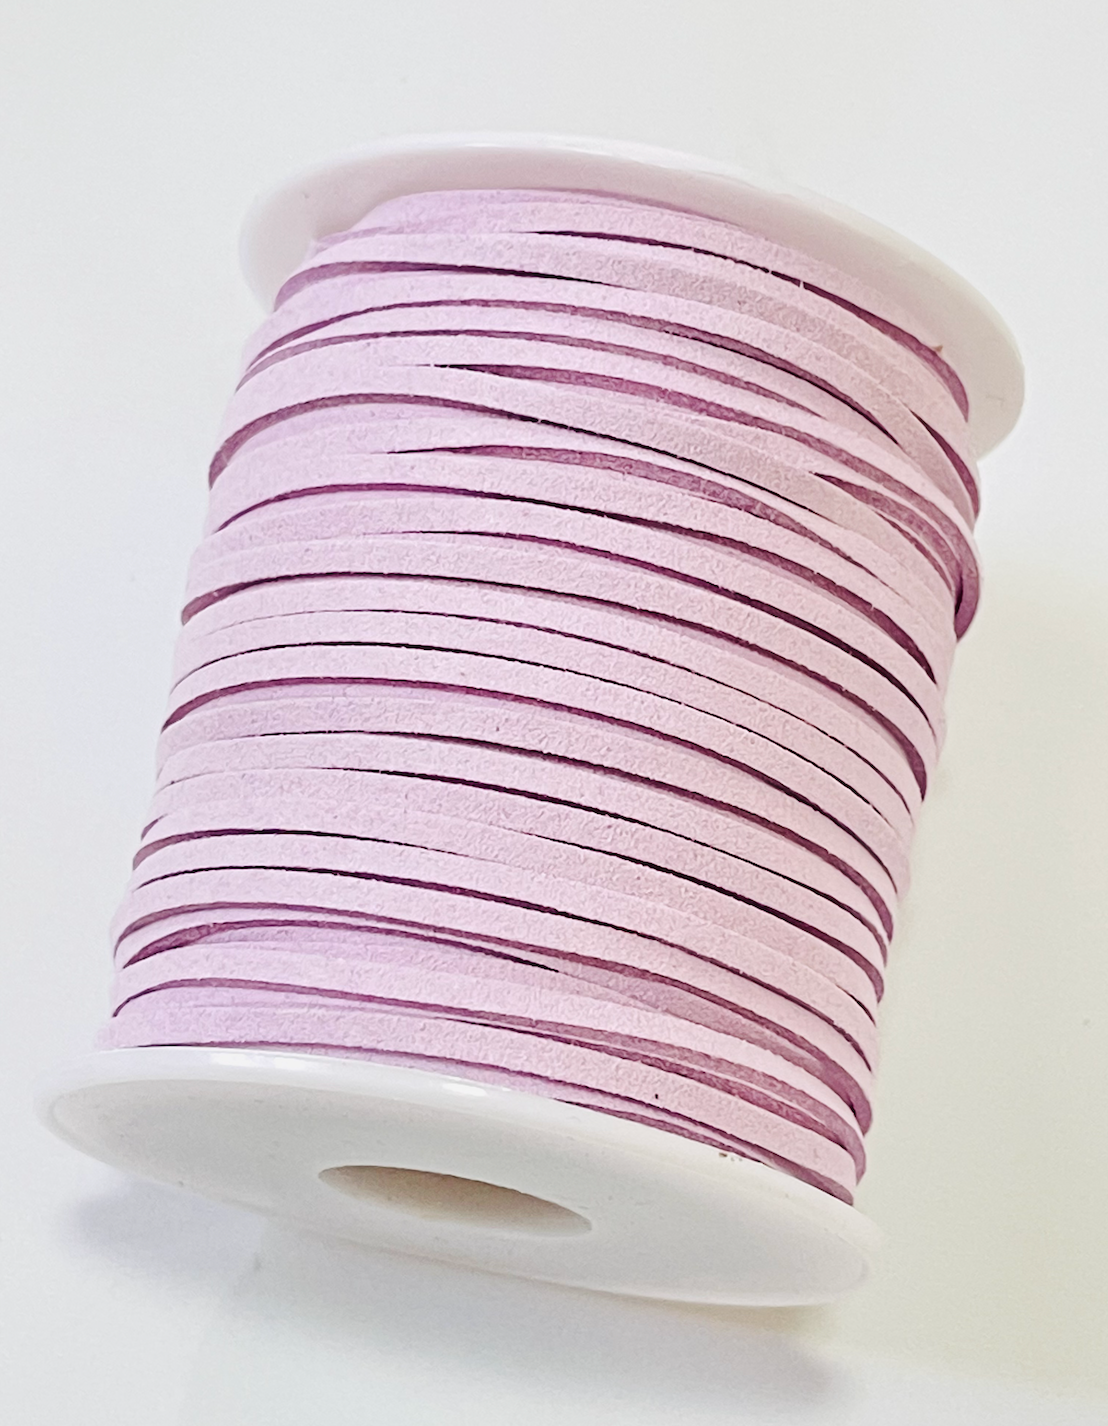 PASTEL Lilac Suede Cord - 5m - Pale Purple Suede Cord